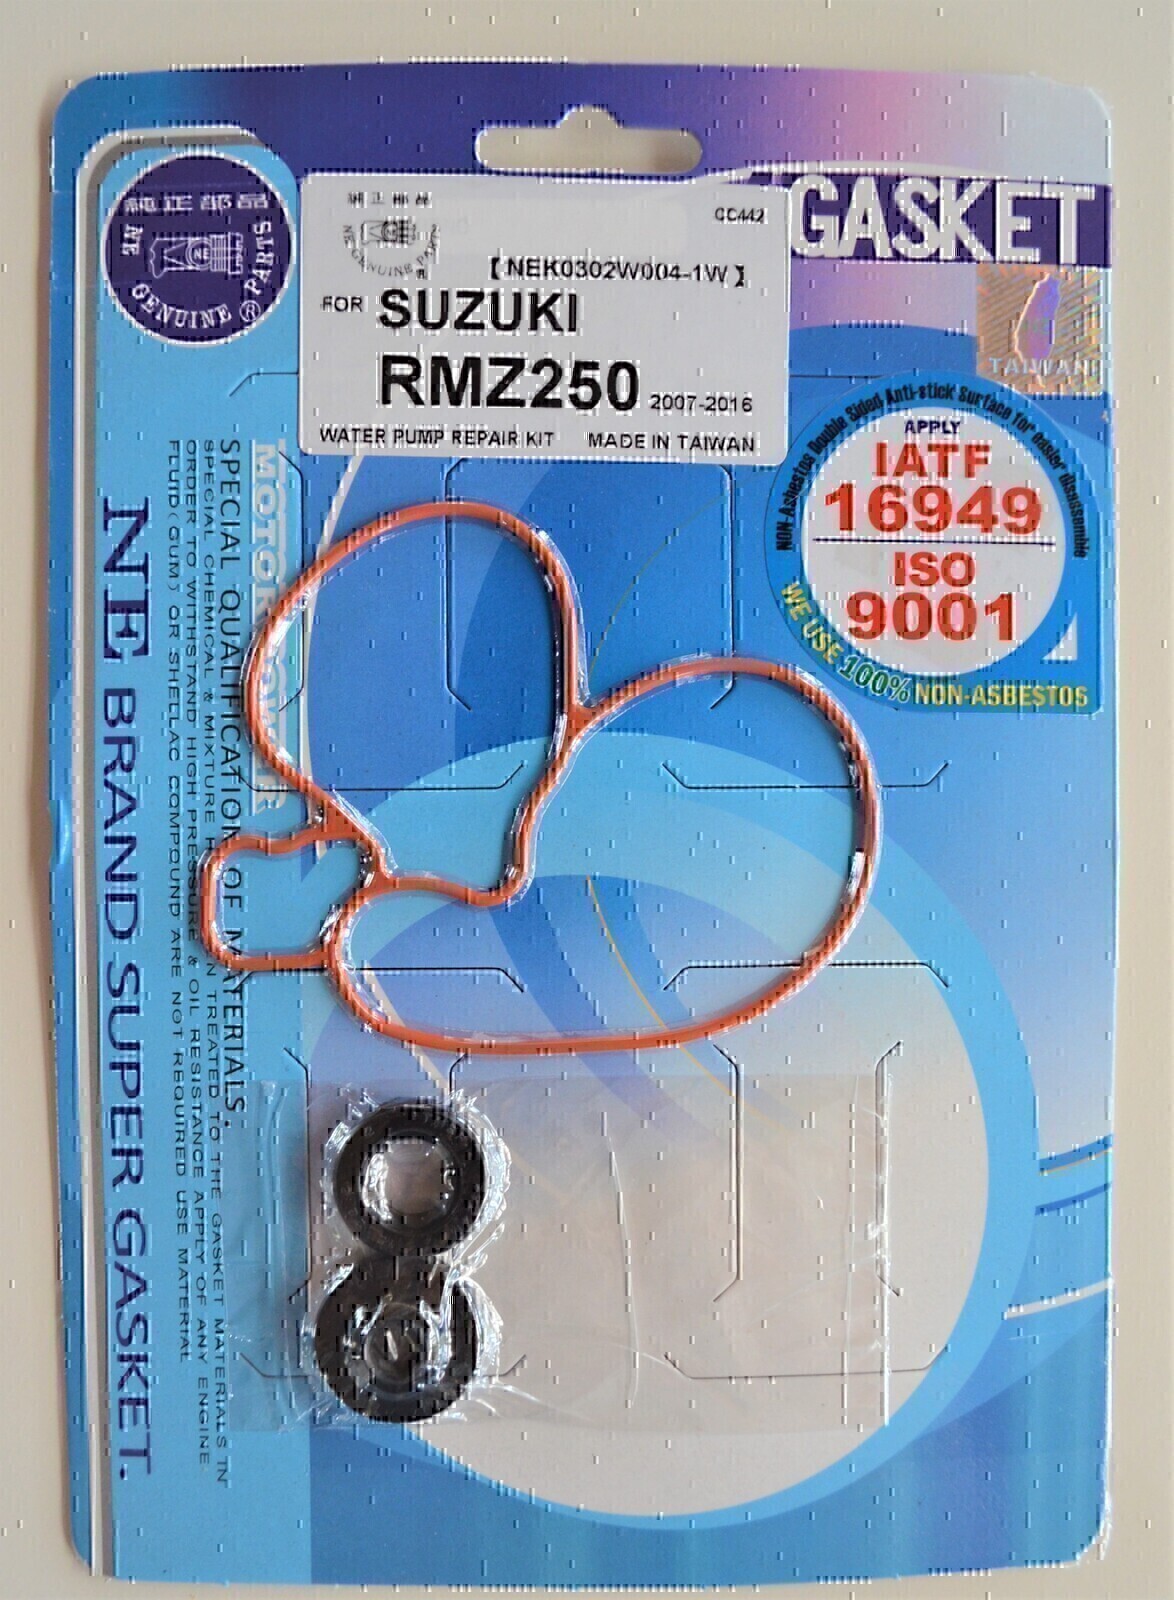 WATER PUMP REPAIR KIT FOR SUZUKI RMZ250 RMZ 250 2007 - 2016